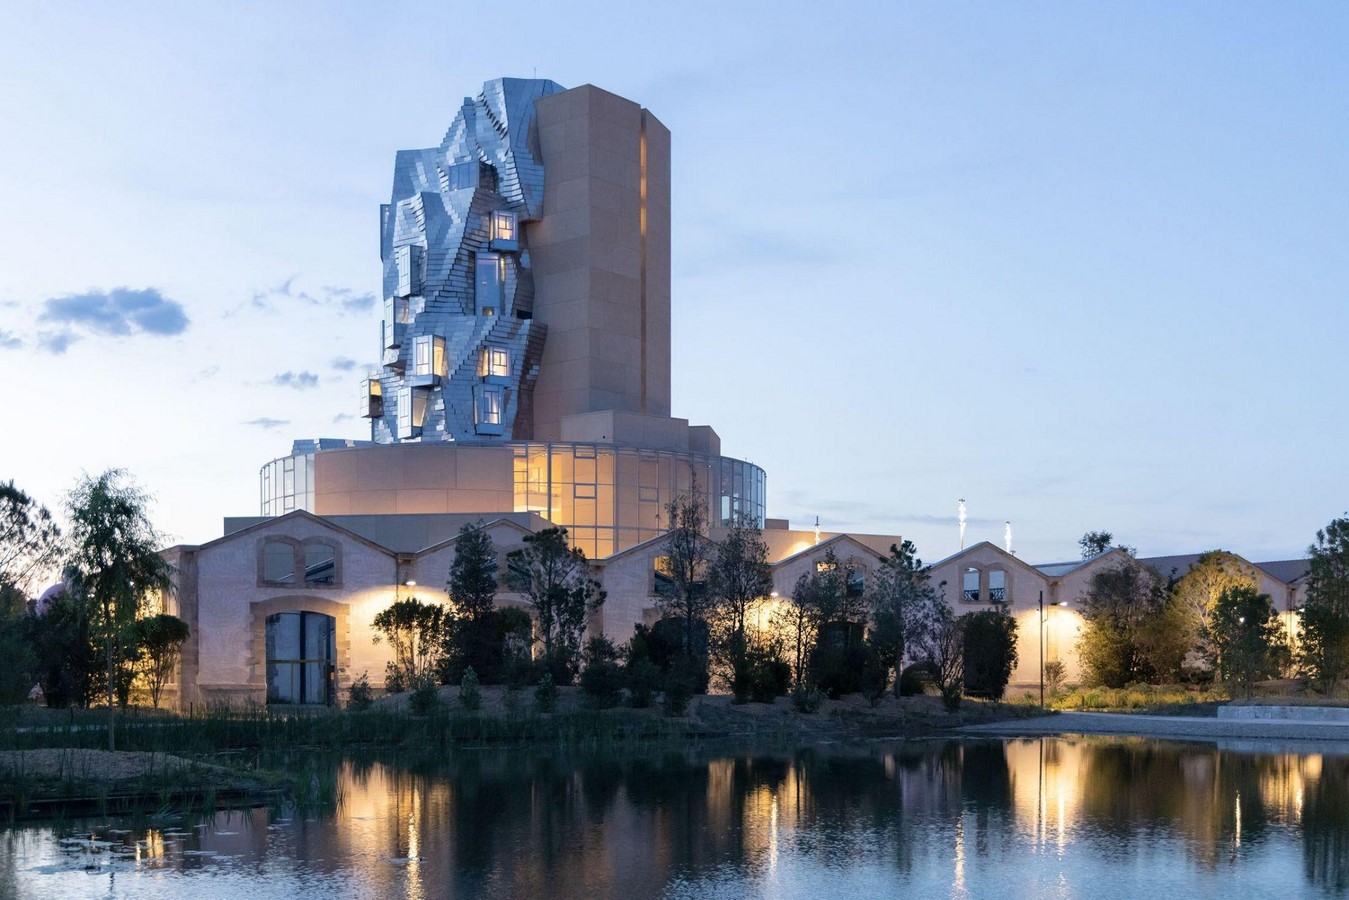 Frank Gehry: The Deconstructivist Architect Who Creates Sculptural Buildings - Sheet18